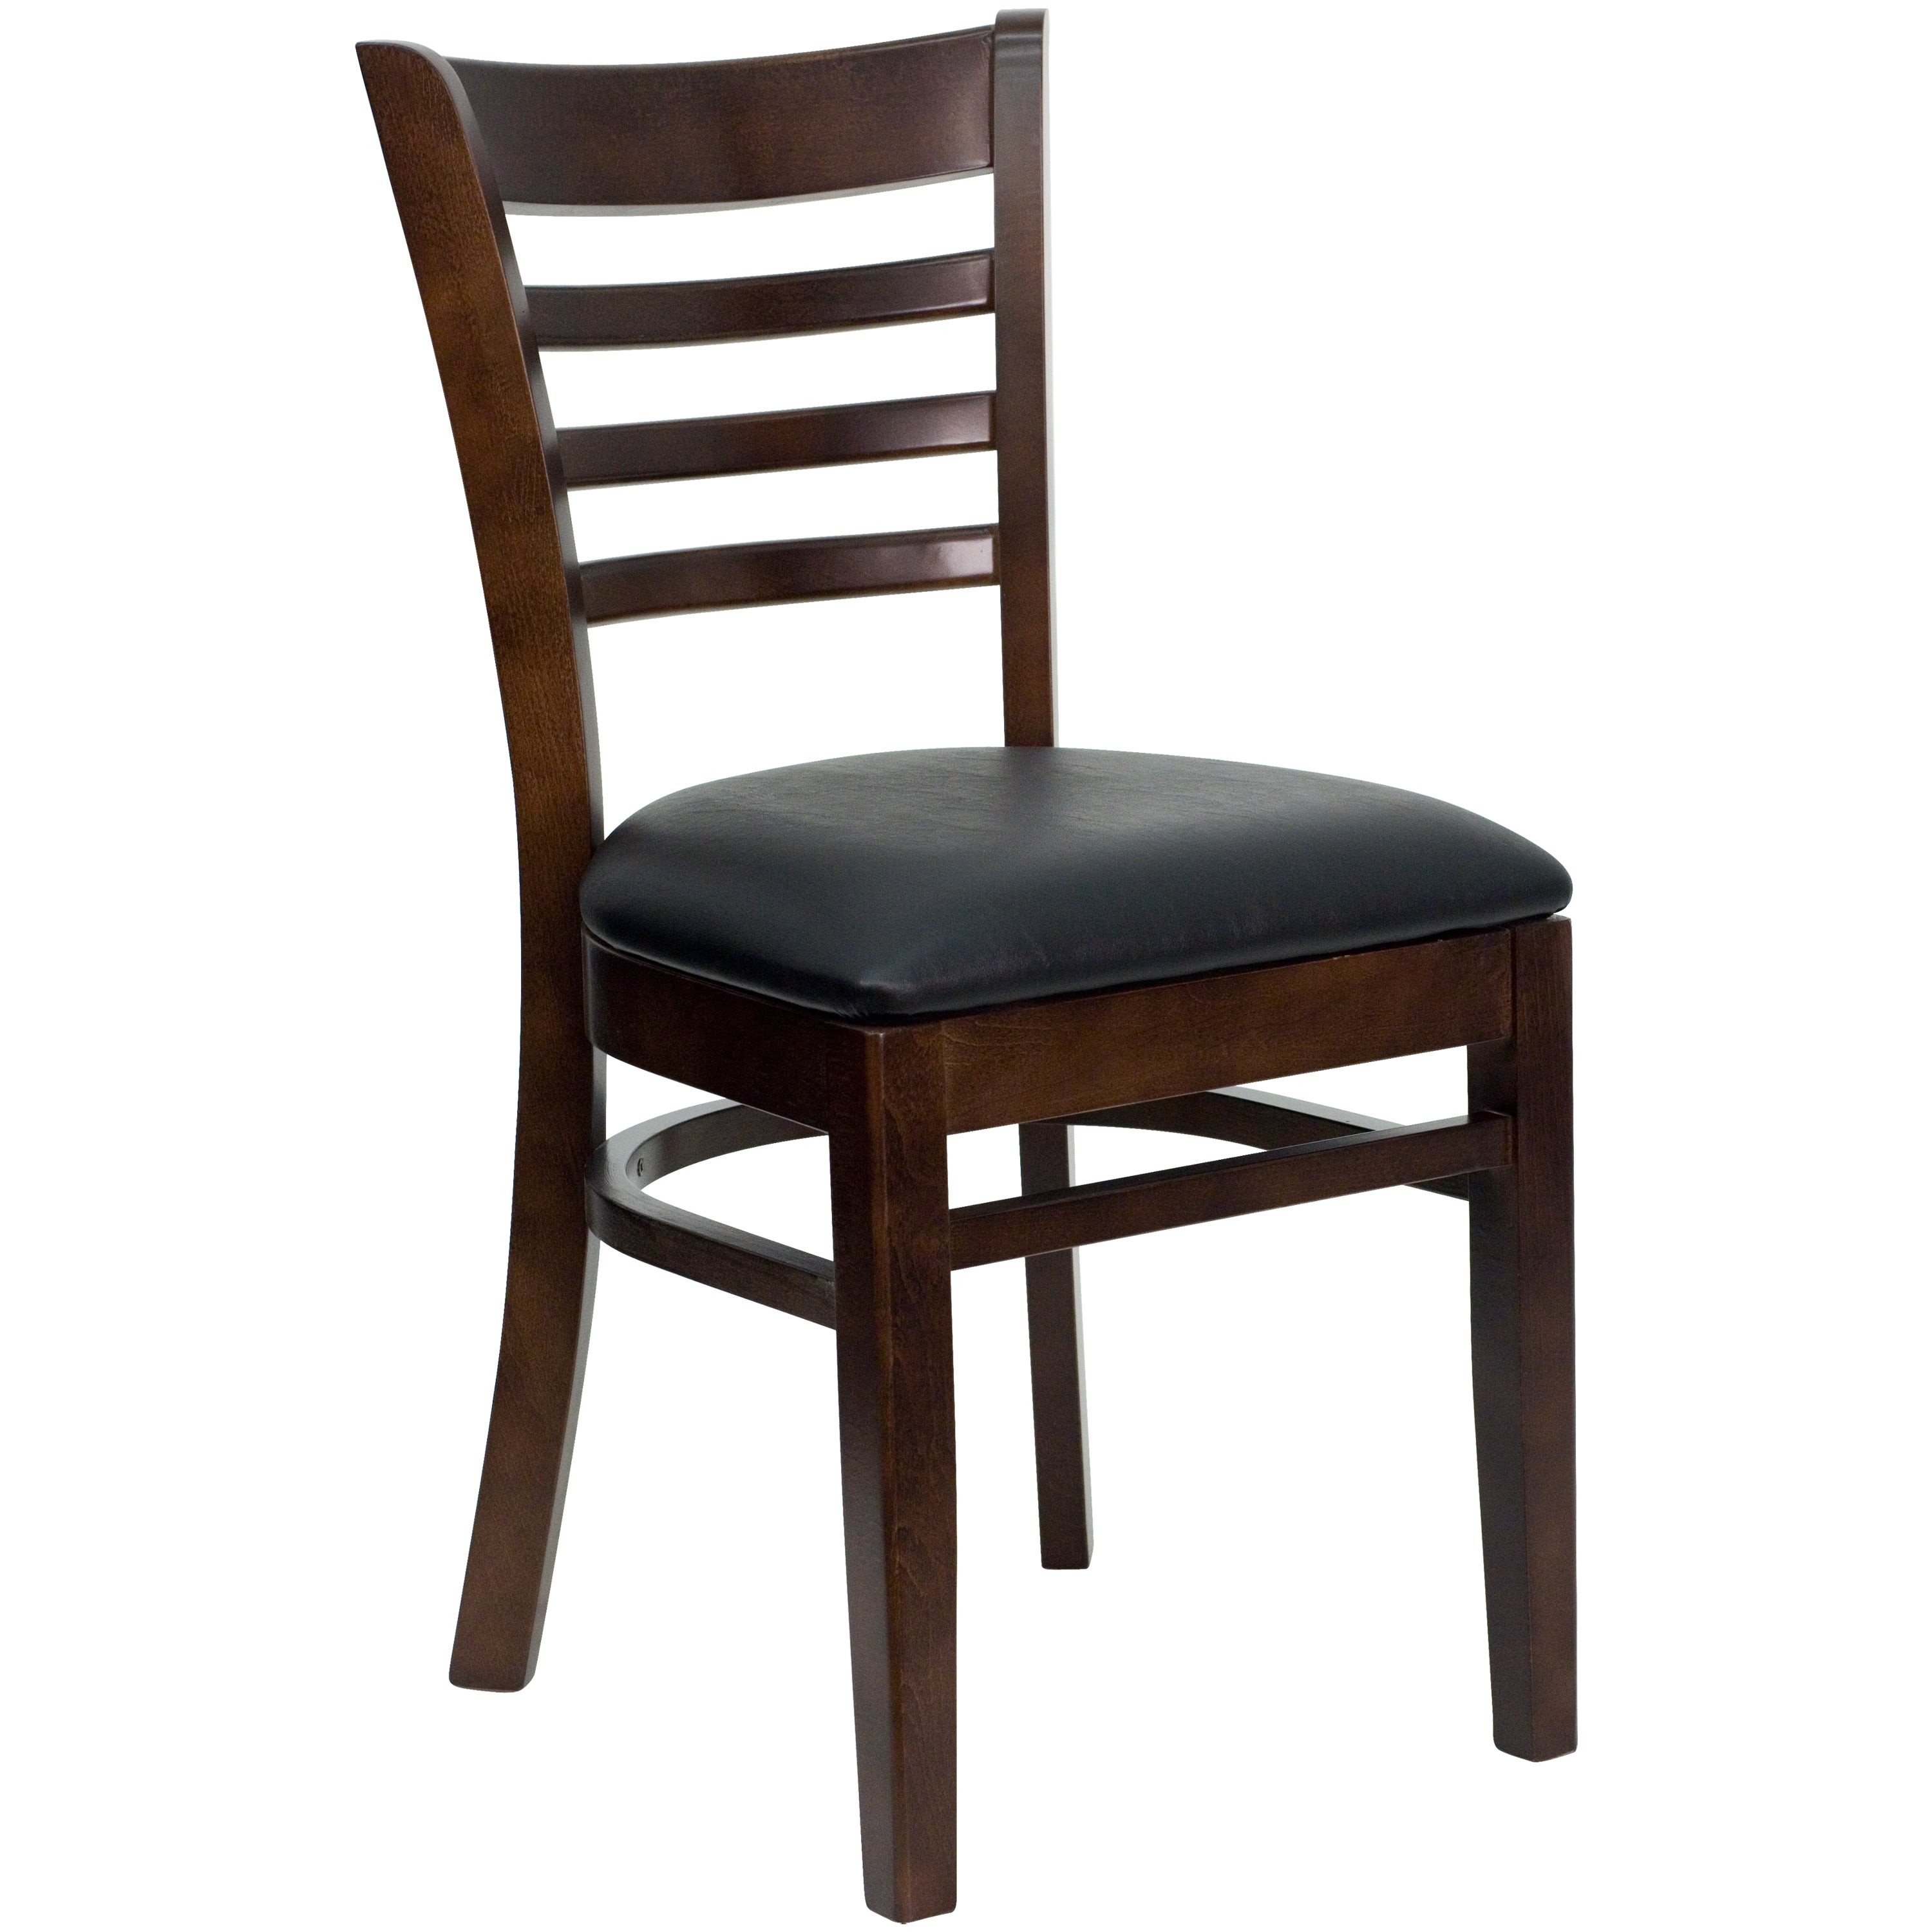 Ladder Back Wooden Restaurant Chair-Restaurant Chair-Flash Furniture-Wall2Wall Furnishings